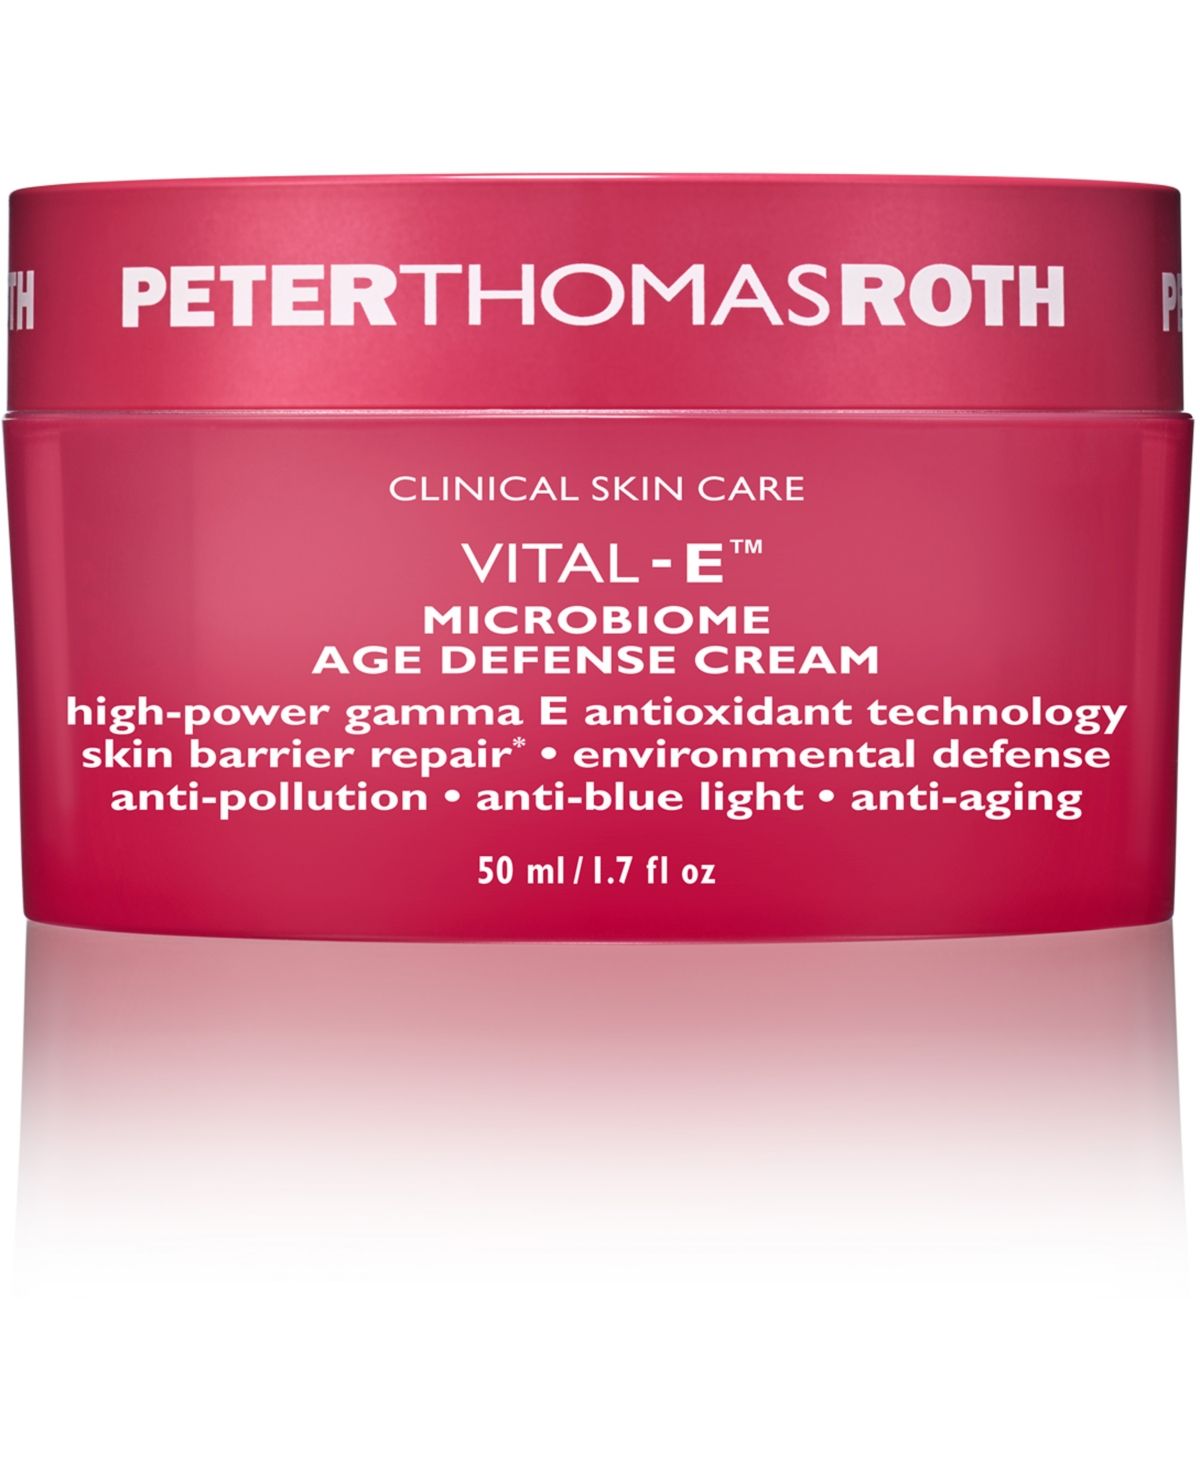 Peter Thomas Roth Vital-e Microbiome Age Defense Cream | Macys (US)